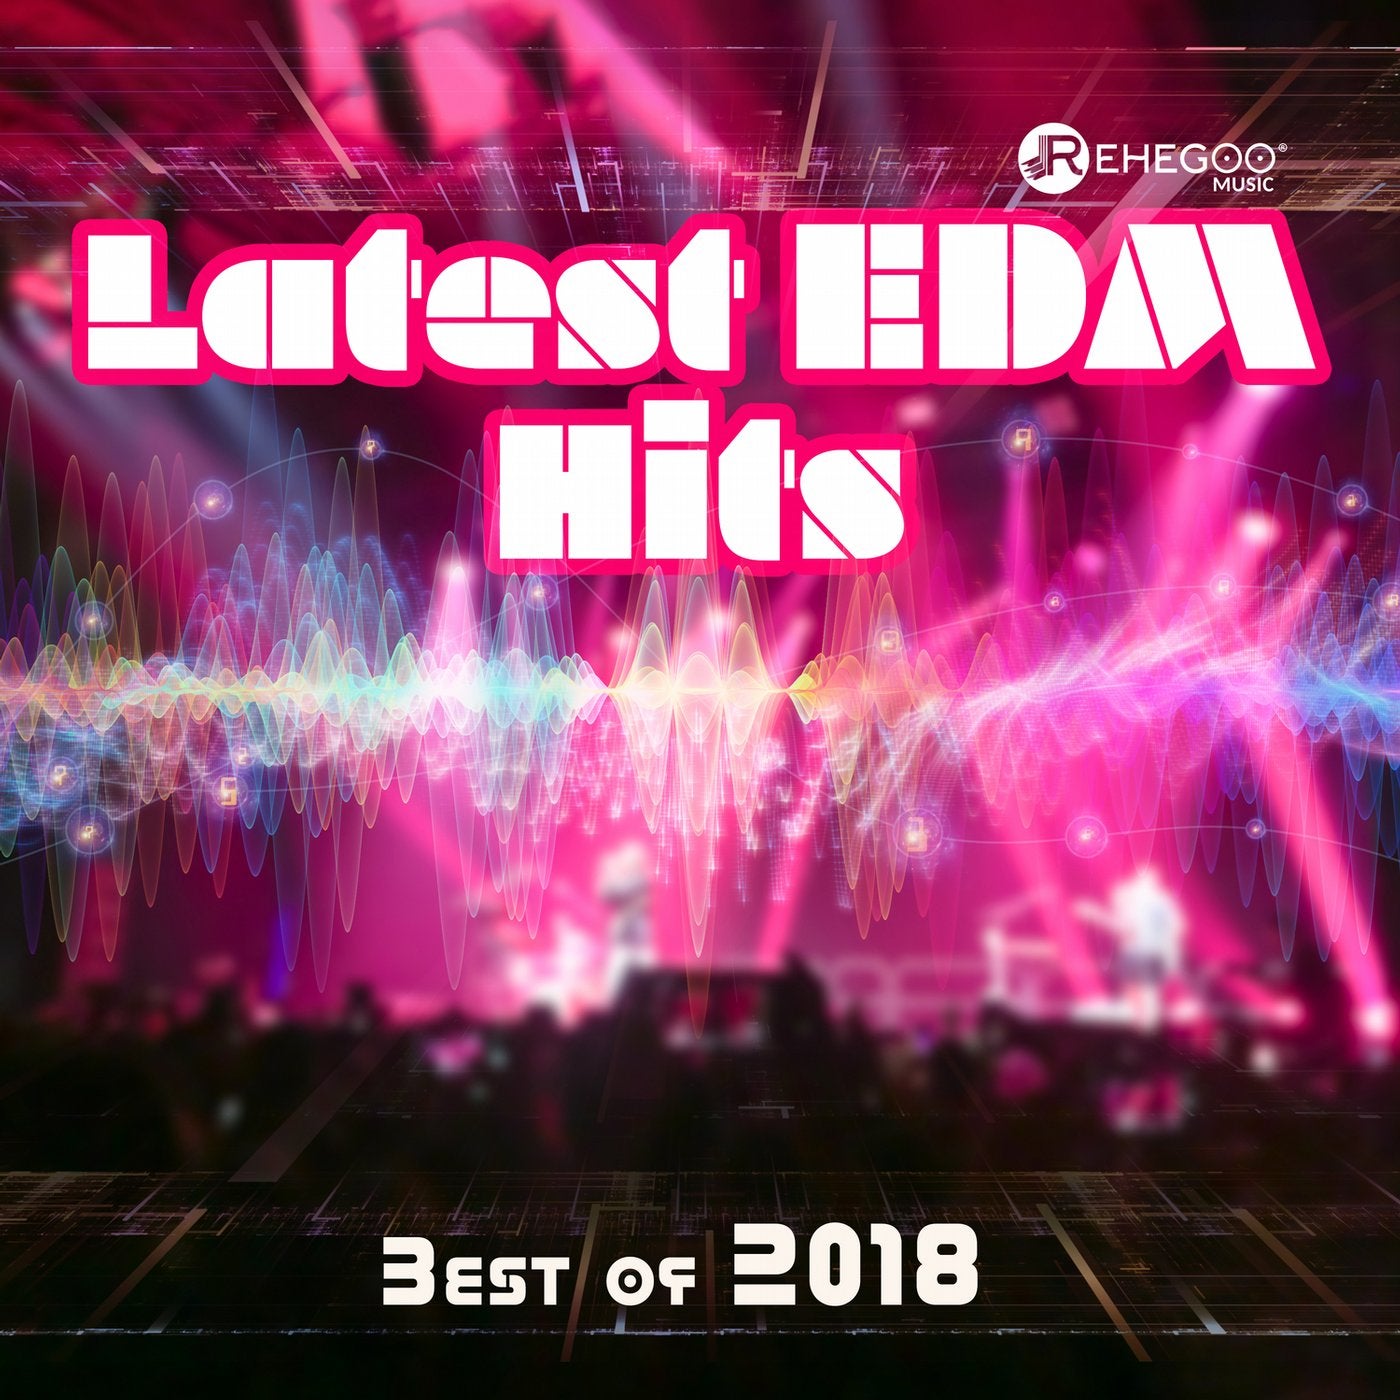 Latest EDM Hits: Best of 2018